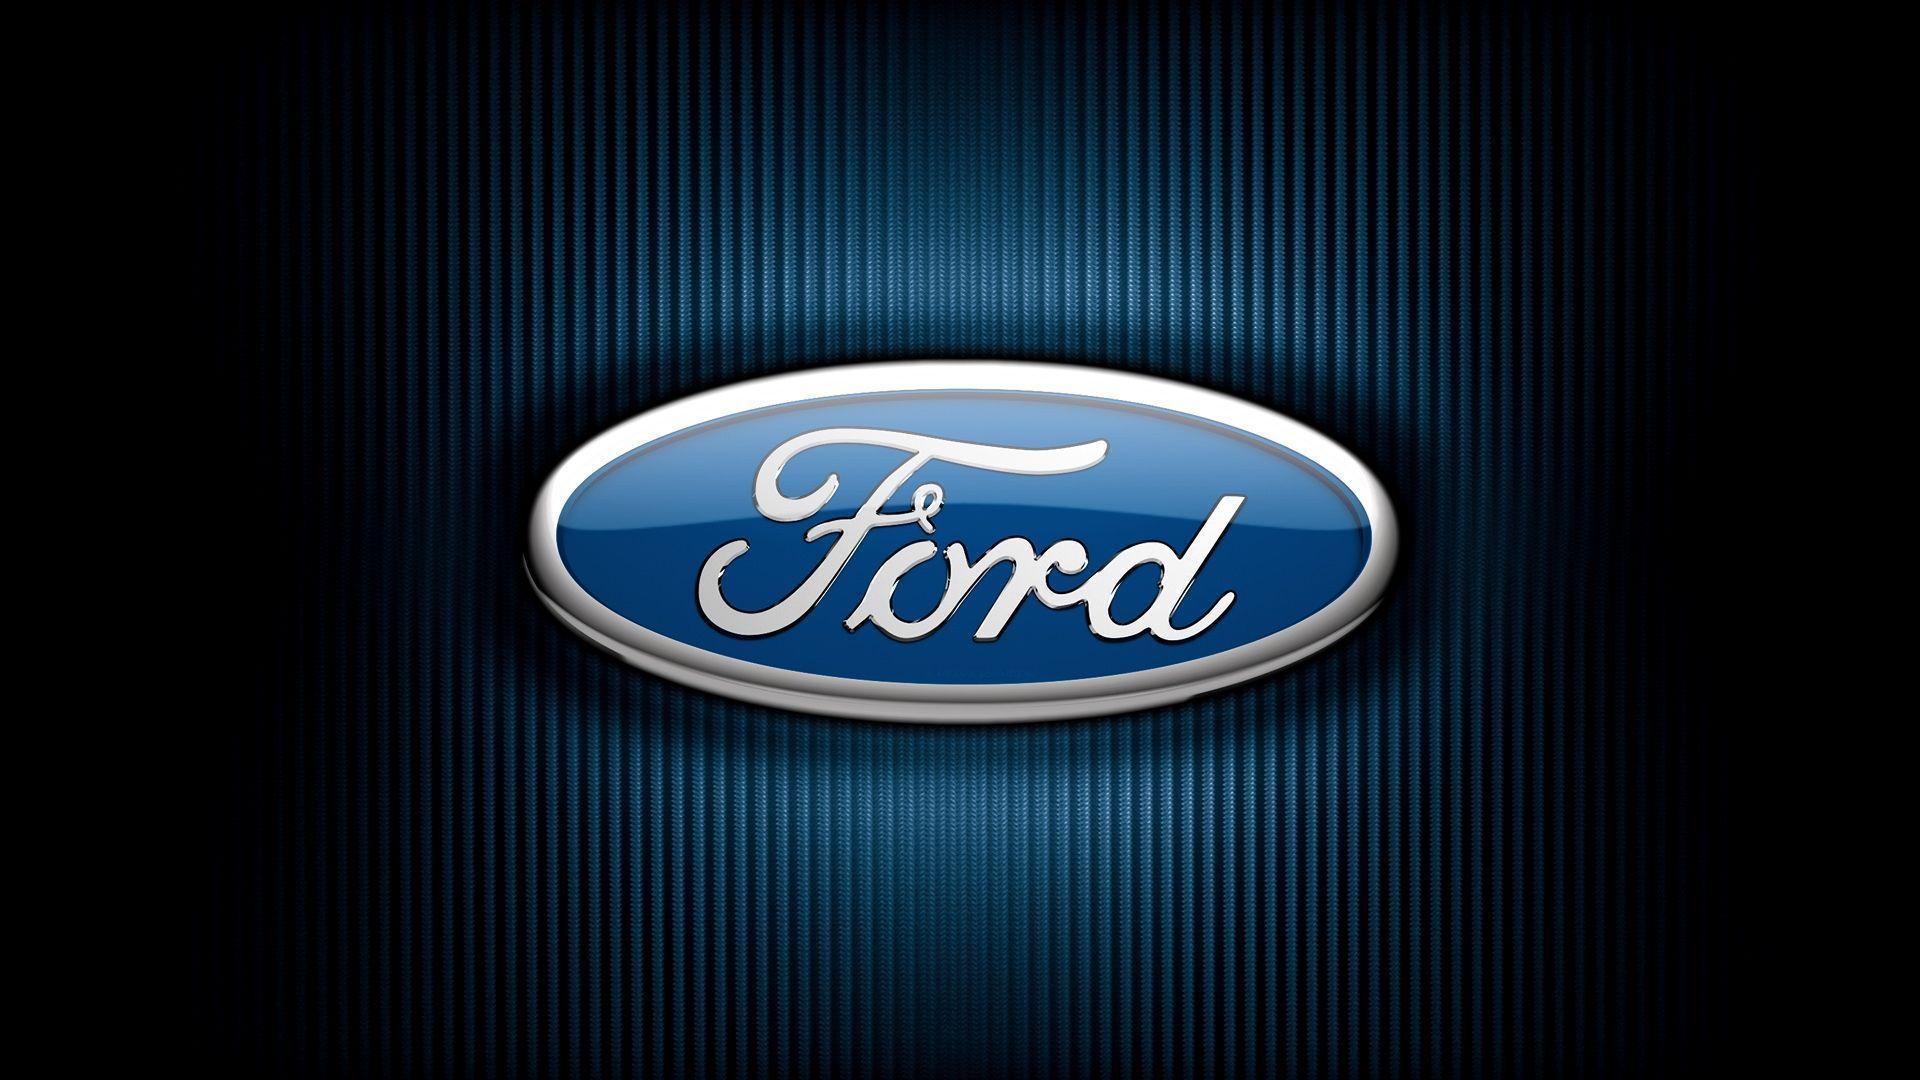 Cool Ford Logo Wallpaper. Hdwidescreens